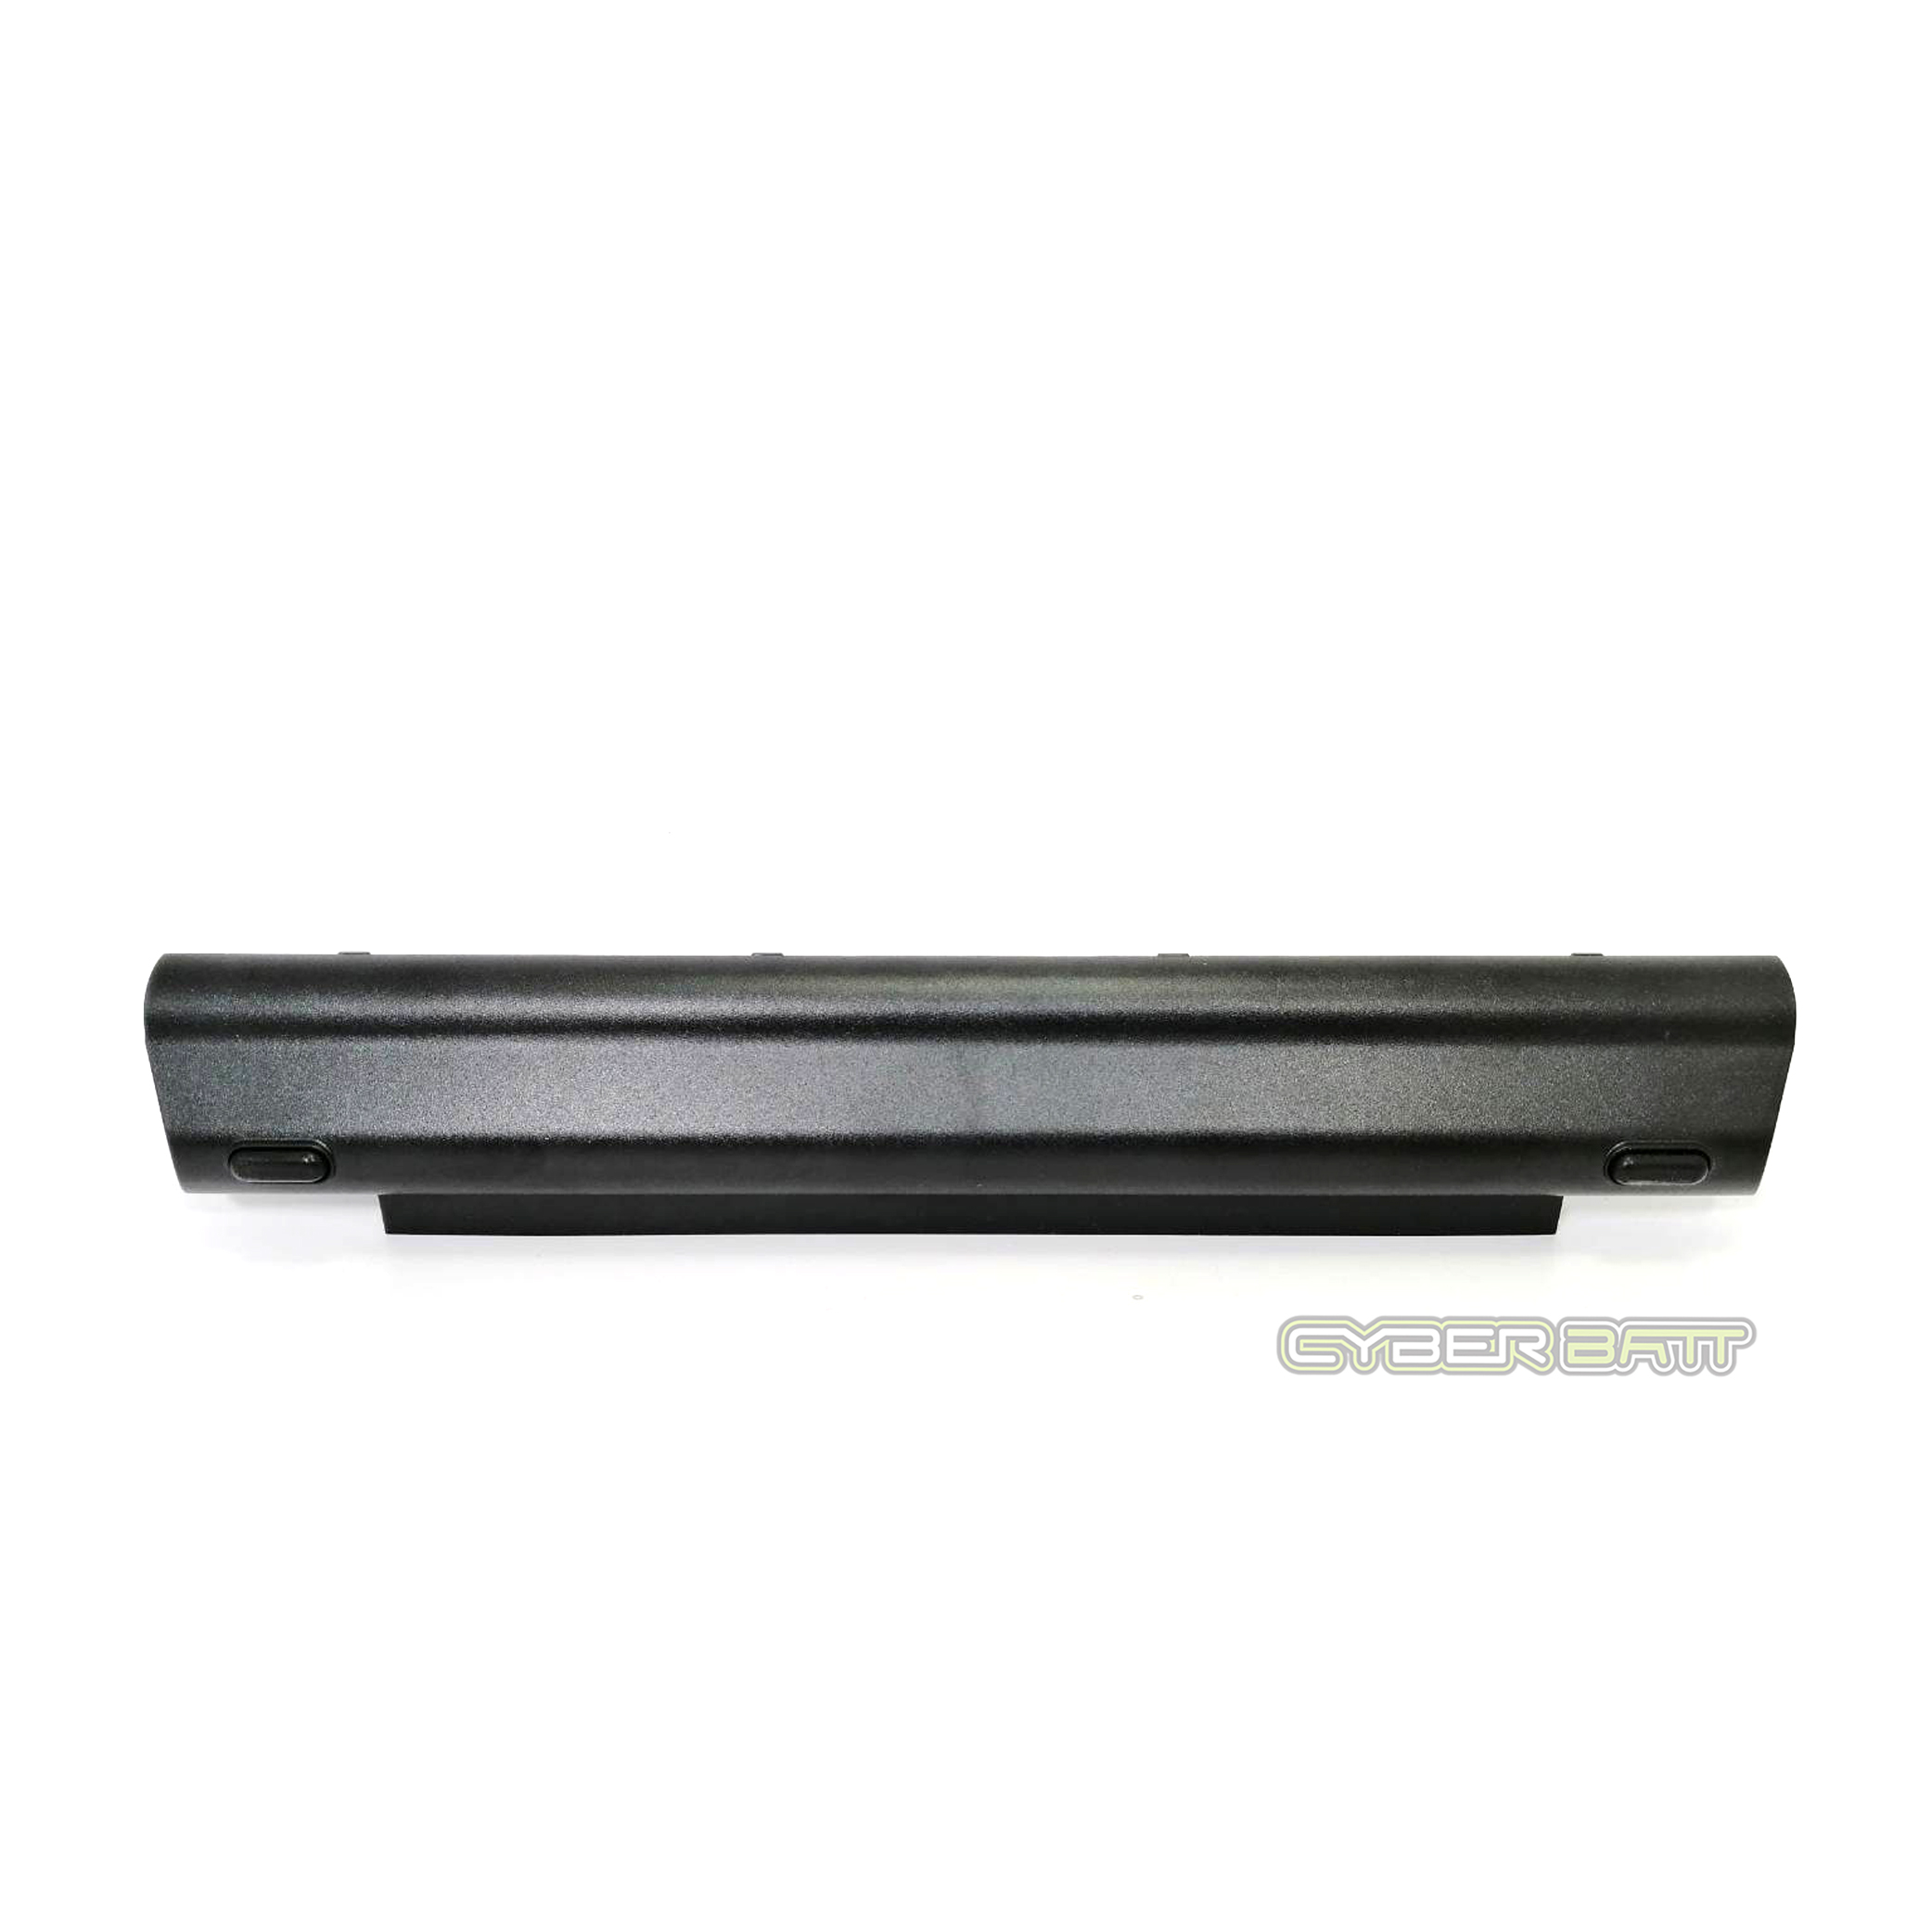 Battery Dell Vostro V131 : 11.1V - 4400 mAh Black (OEM)